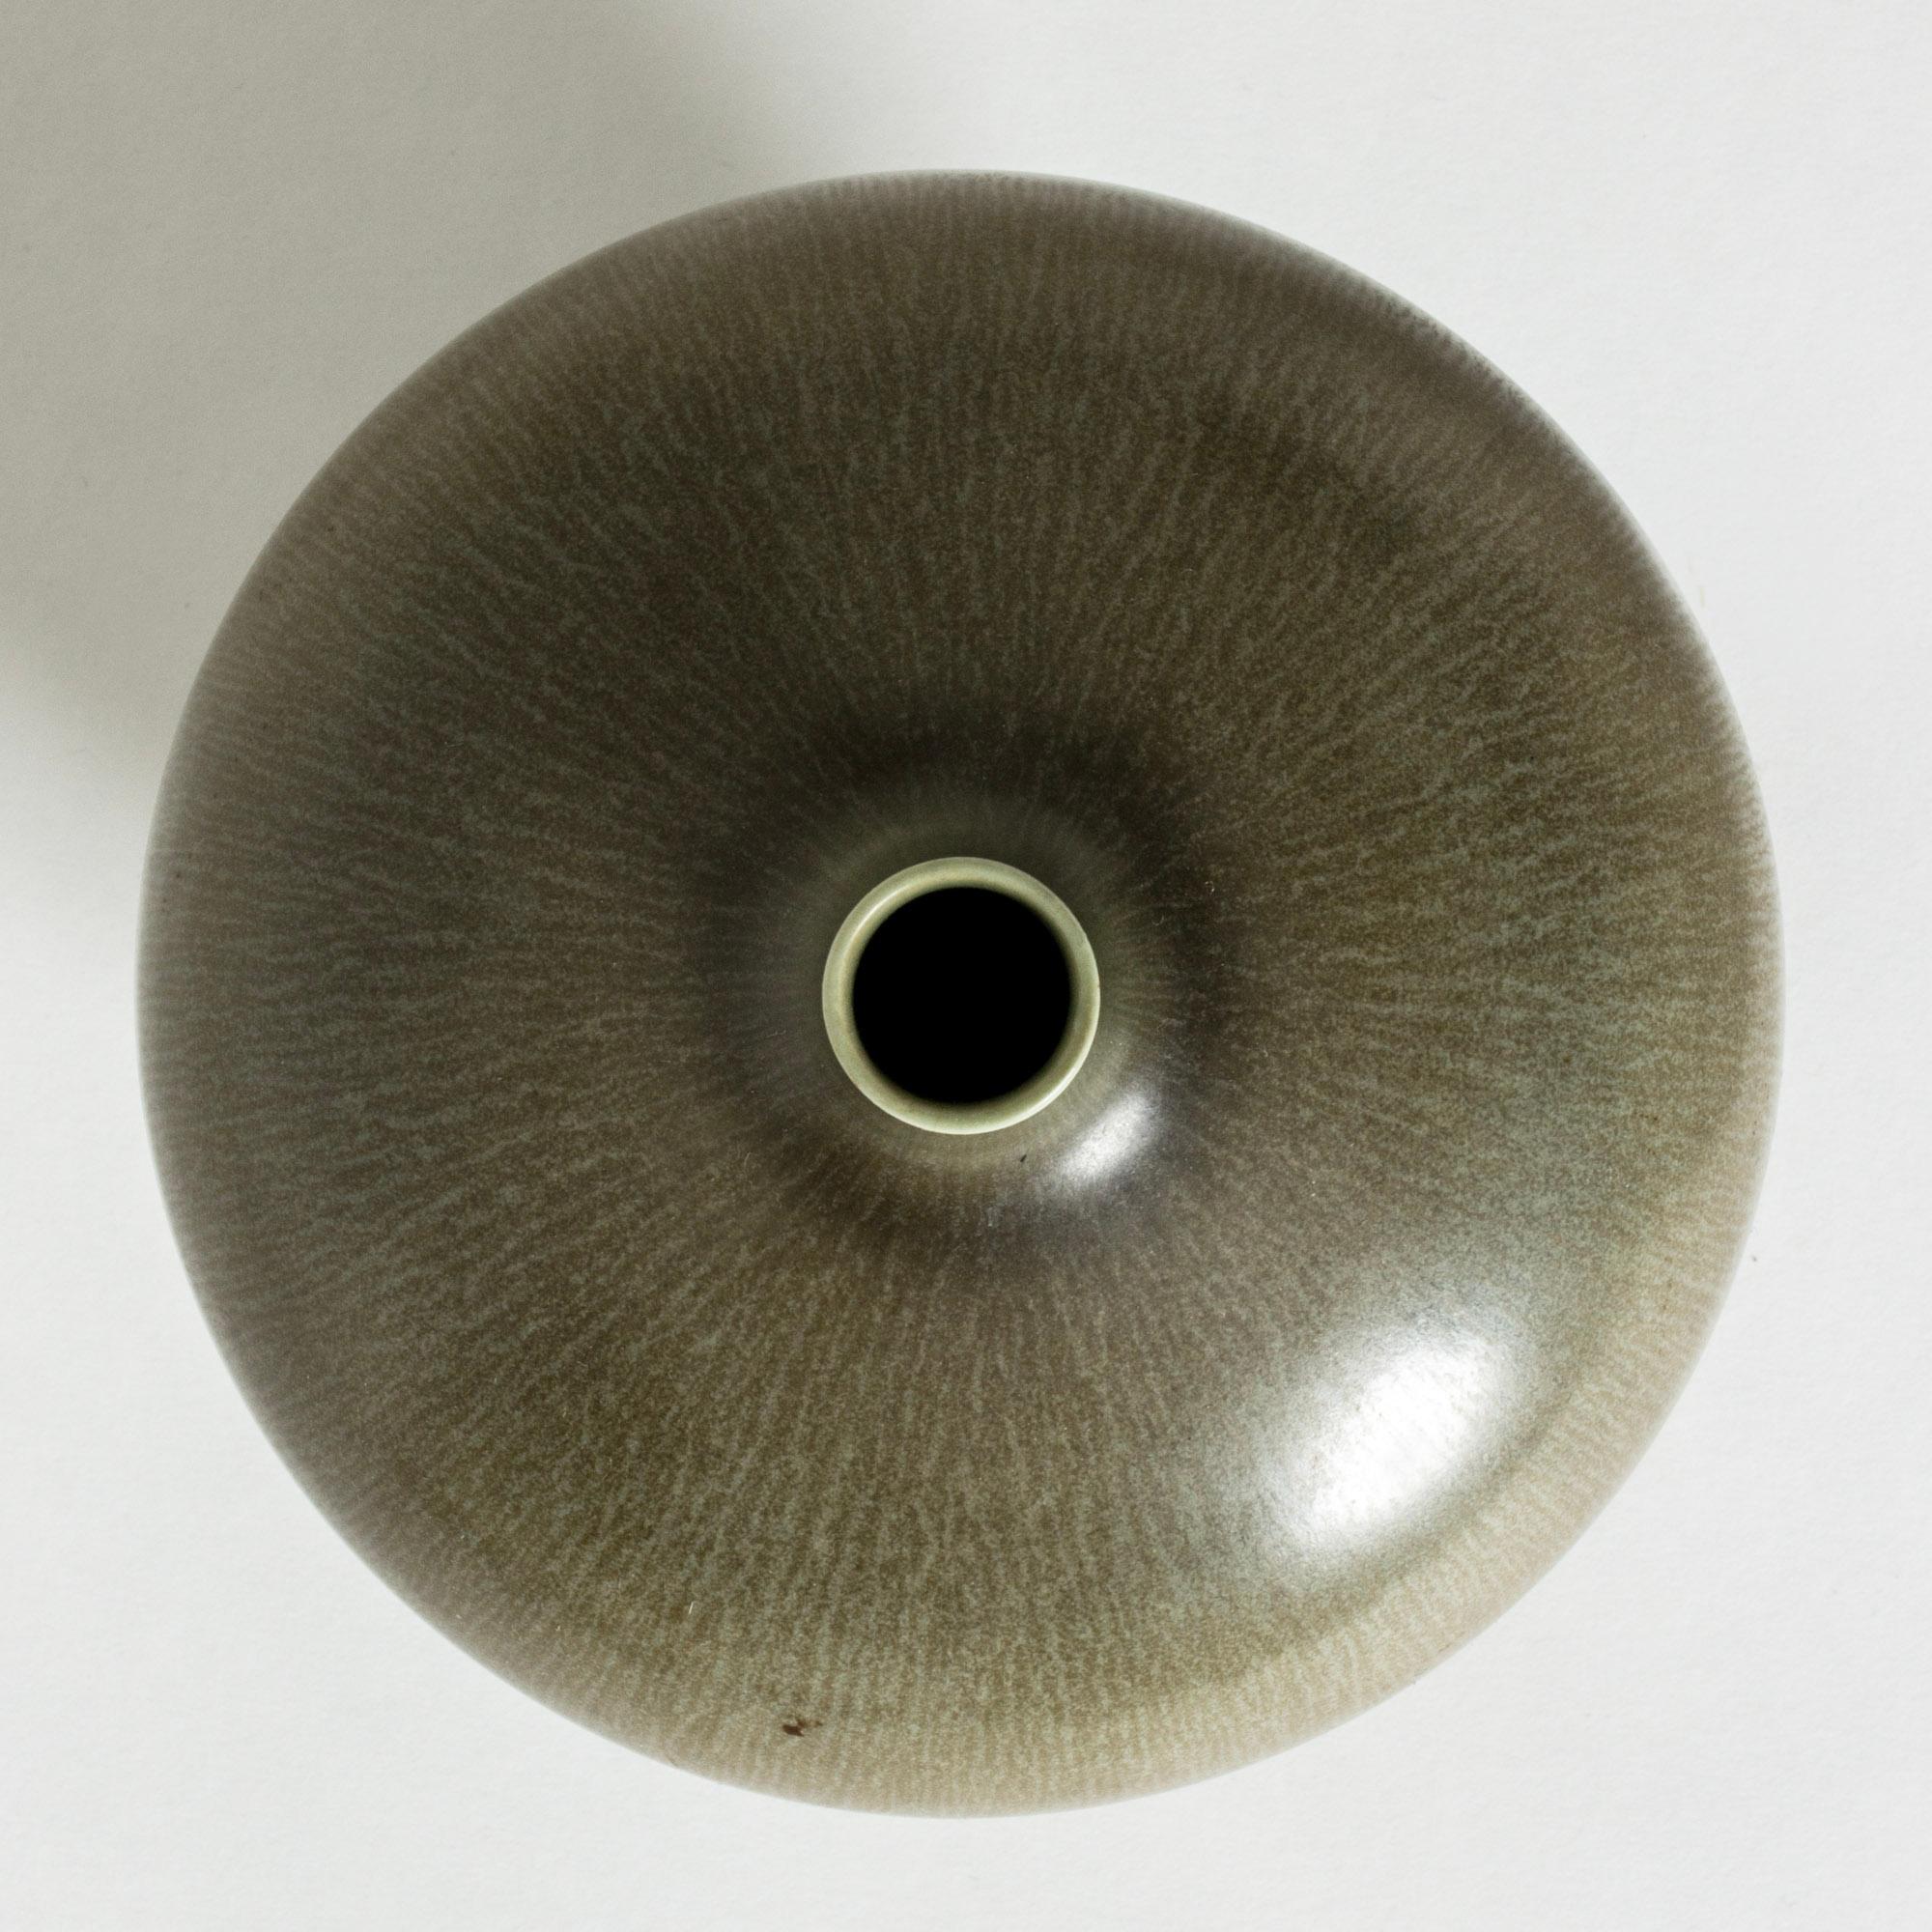 Midcentury Stoneware Vase by Berndt Friberg, Gustavsberg, Sweden, 1950s In Good Condition For Sale In Stockholm, SE